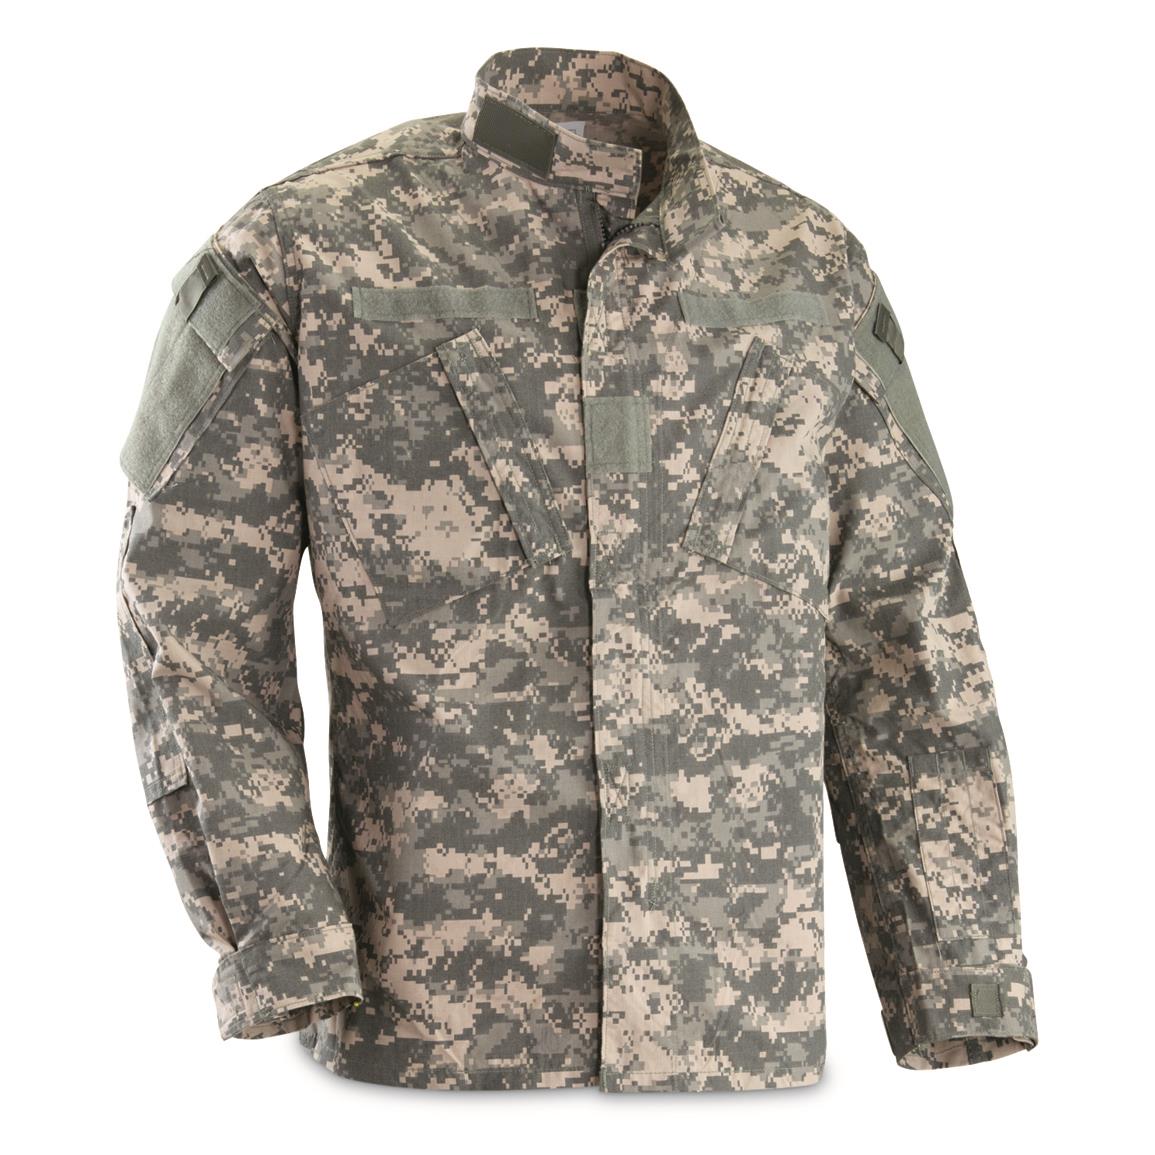 U.S. Military Surplus ACU BDU Combat Shirt, New, Army Digital